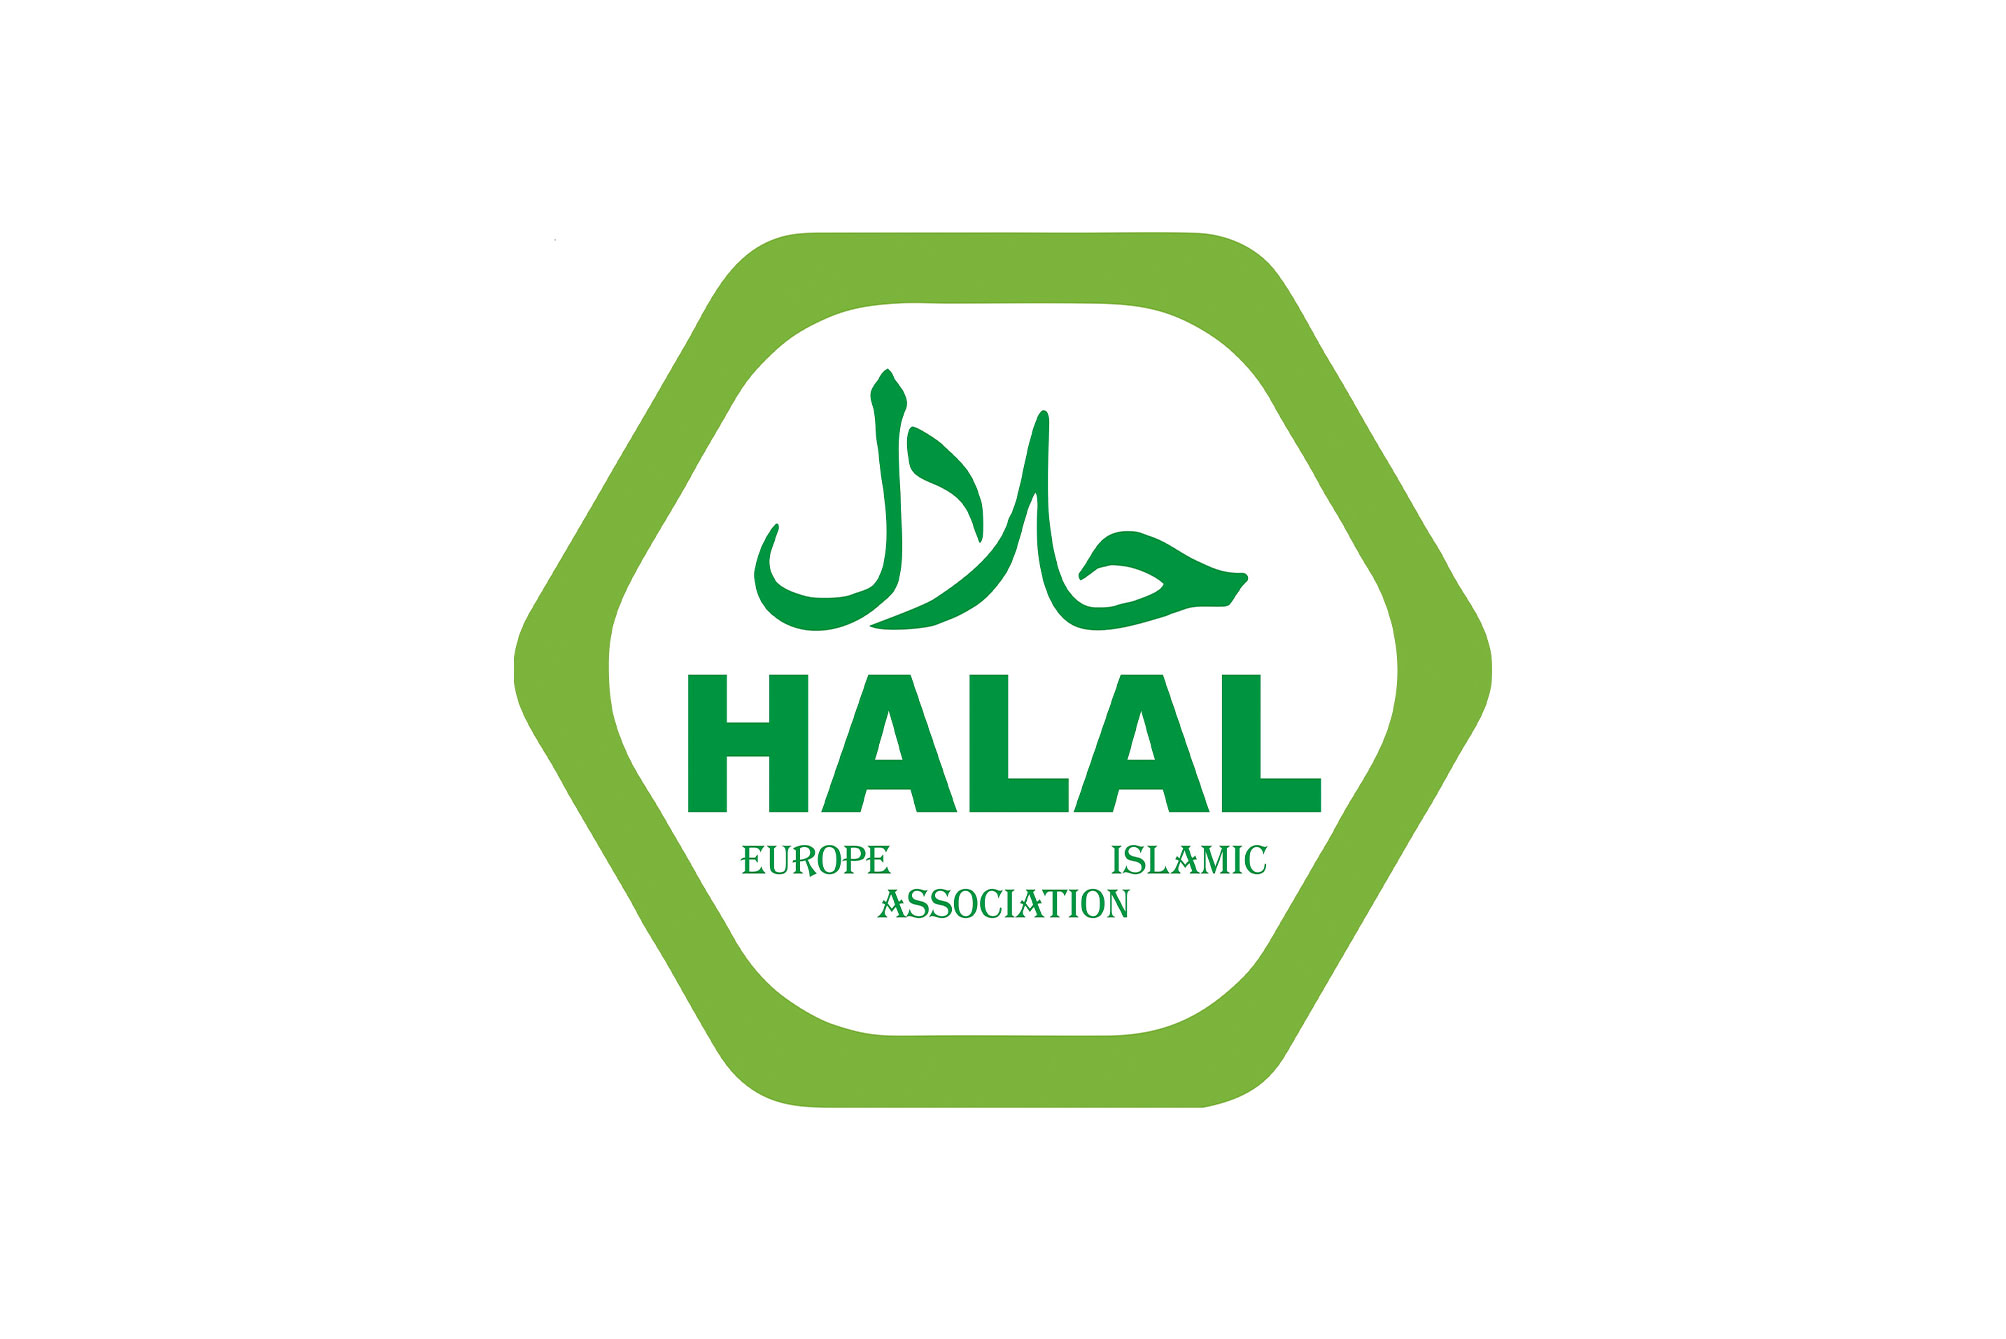 Поселок халяль. Халяль лого. Значок халал. 100 Halal logo. Халяль знак логотип.